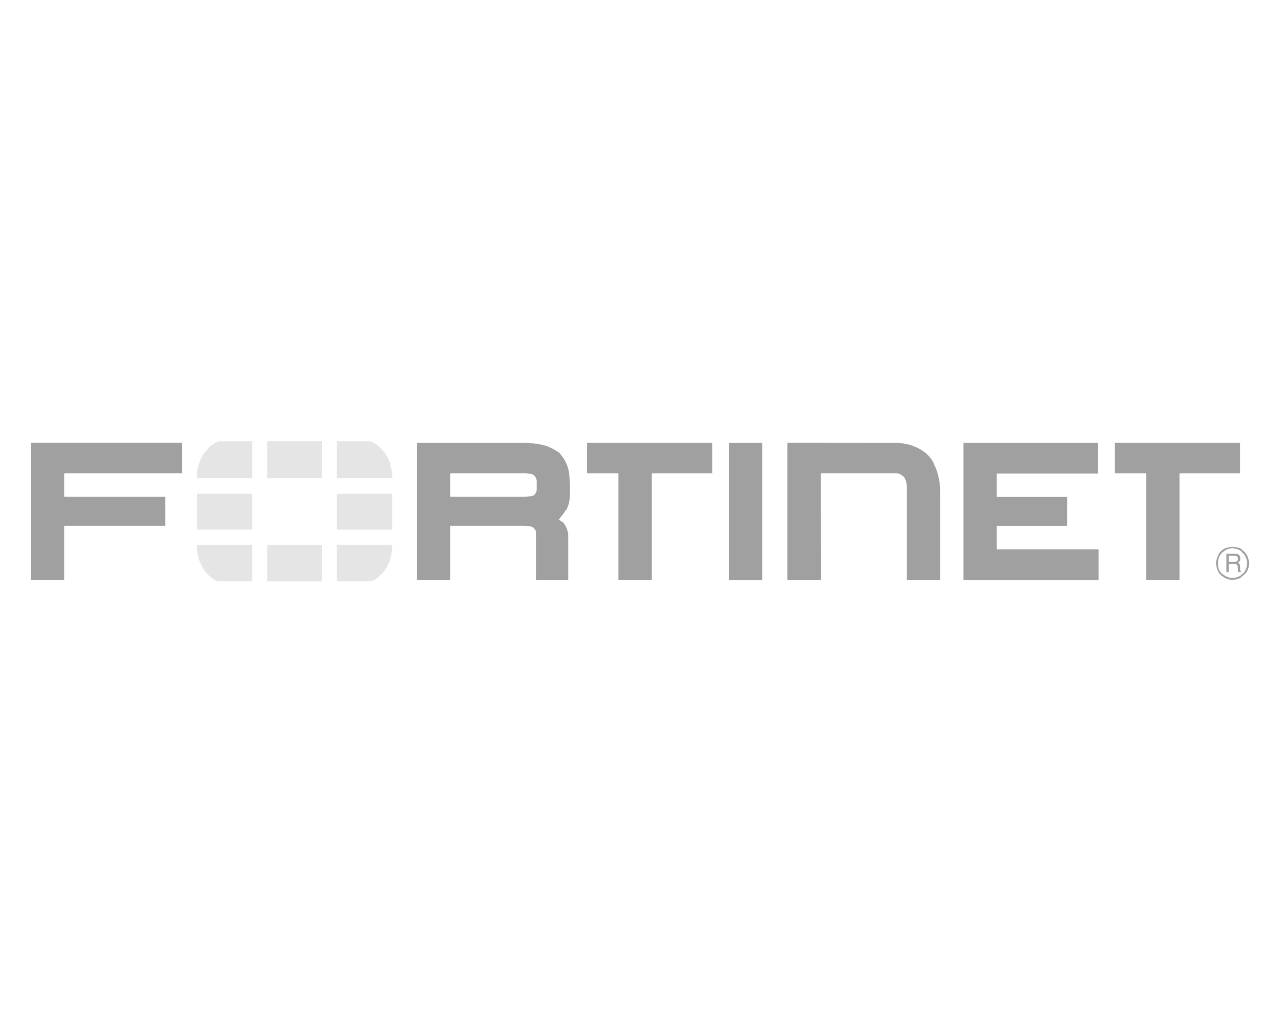 fortinet logo bw